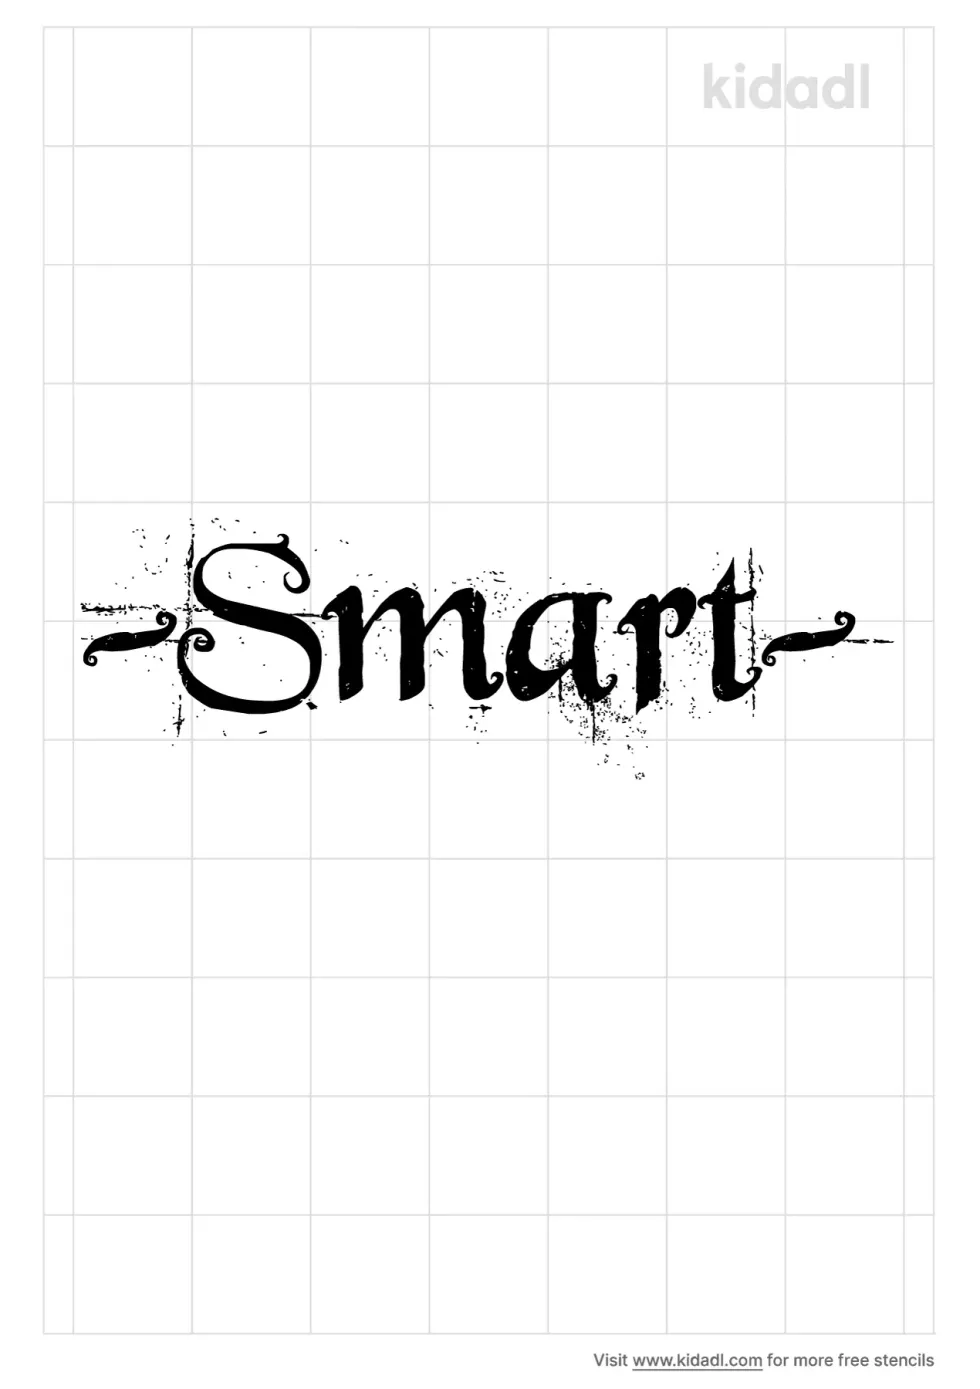 Smart